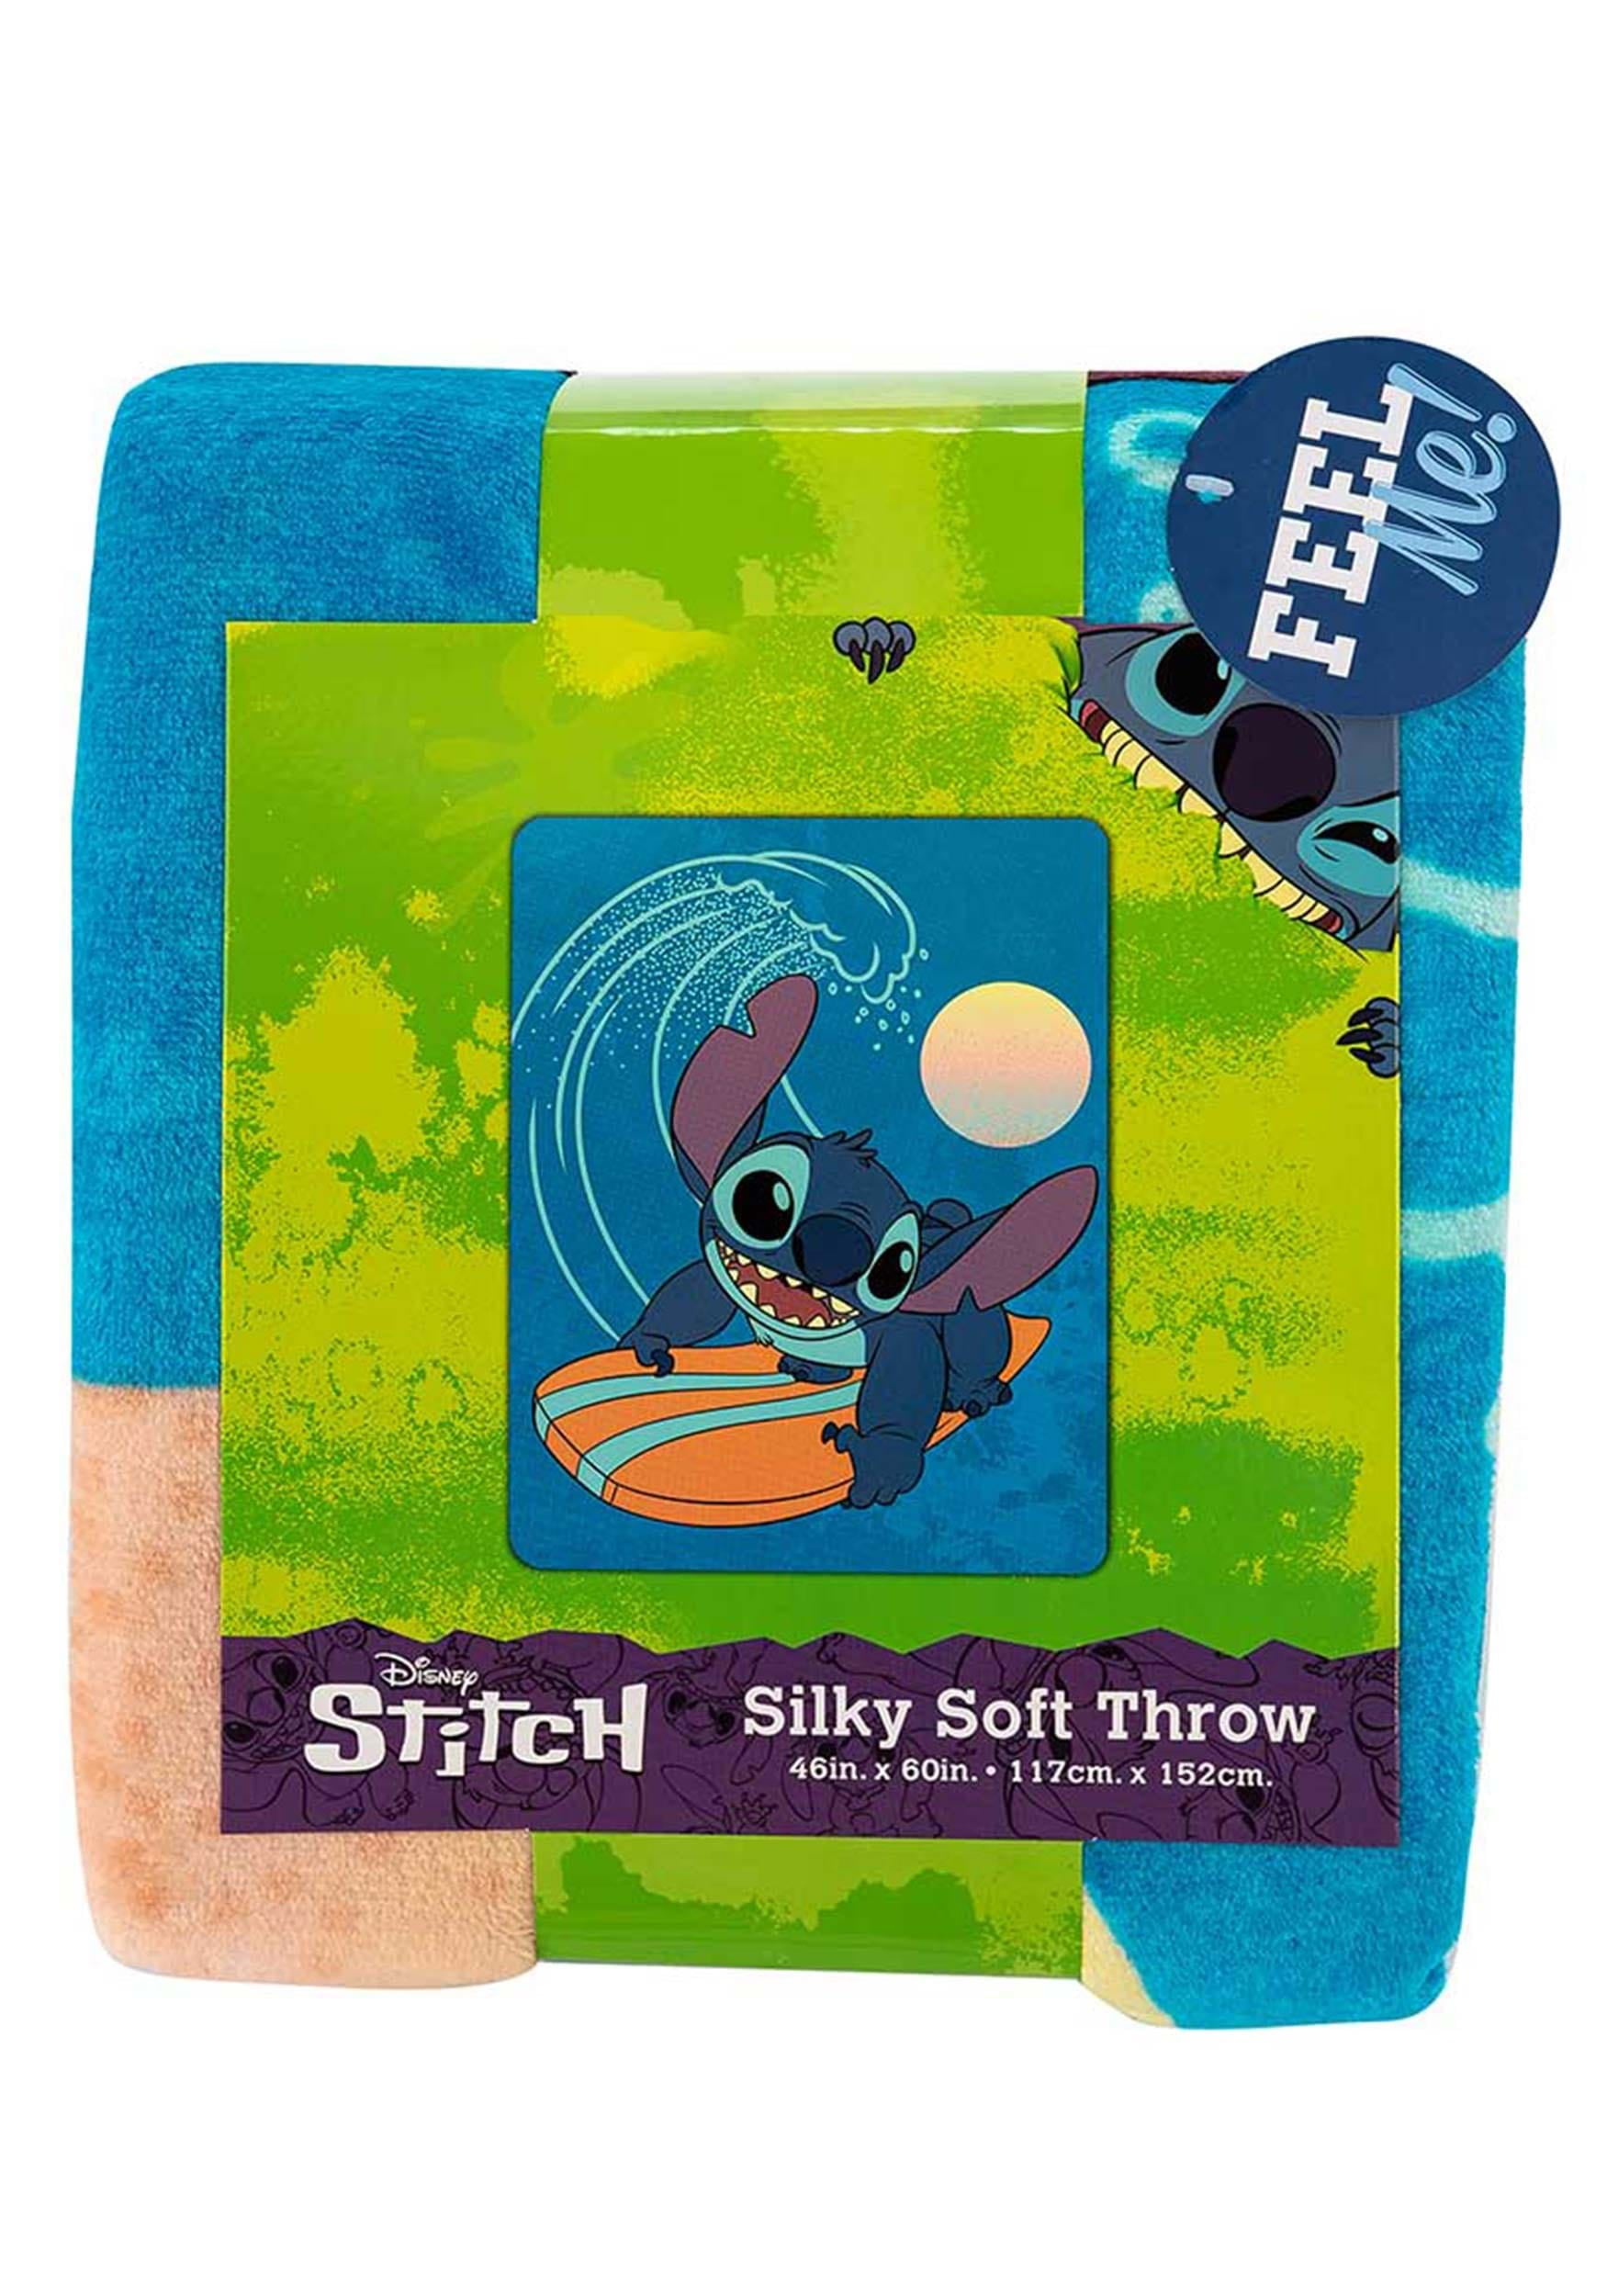 Disney Lilo & Stitch Throw Blanket, Silk Touch, 46x60, Muticolor, 100%  Polyester, 1 Each 